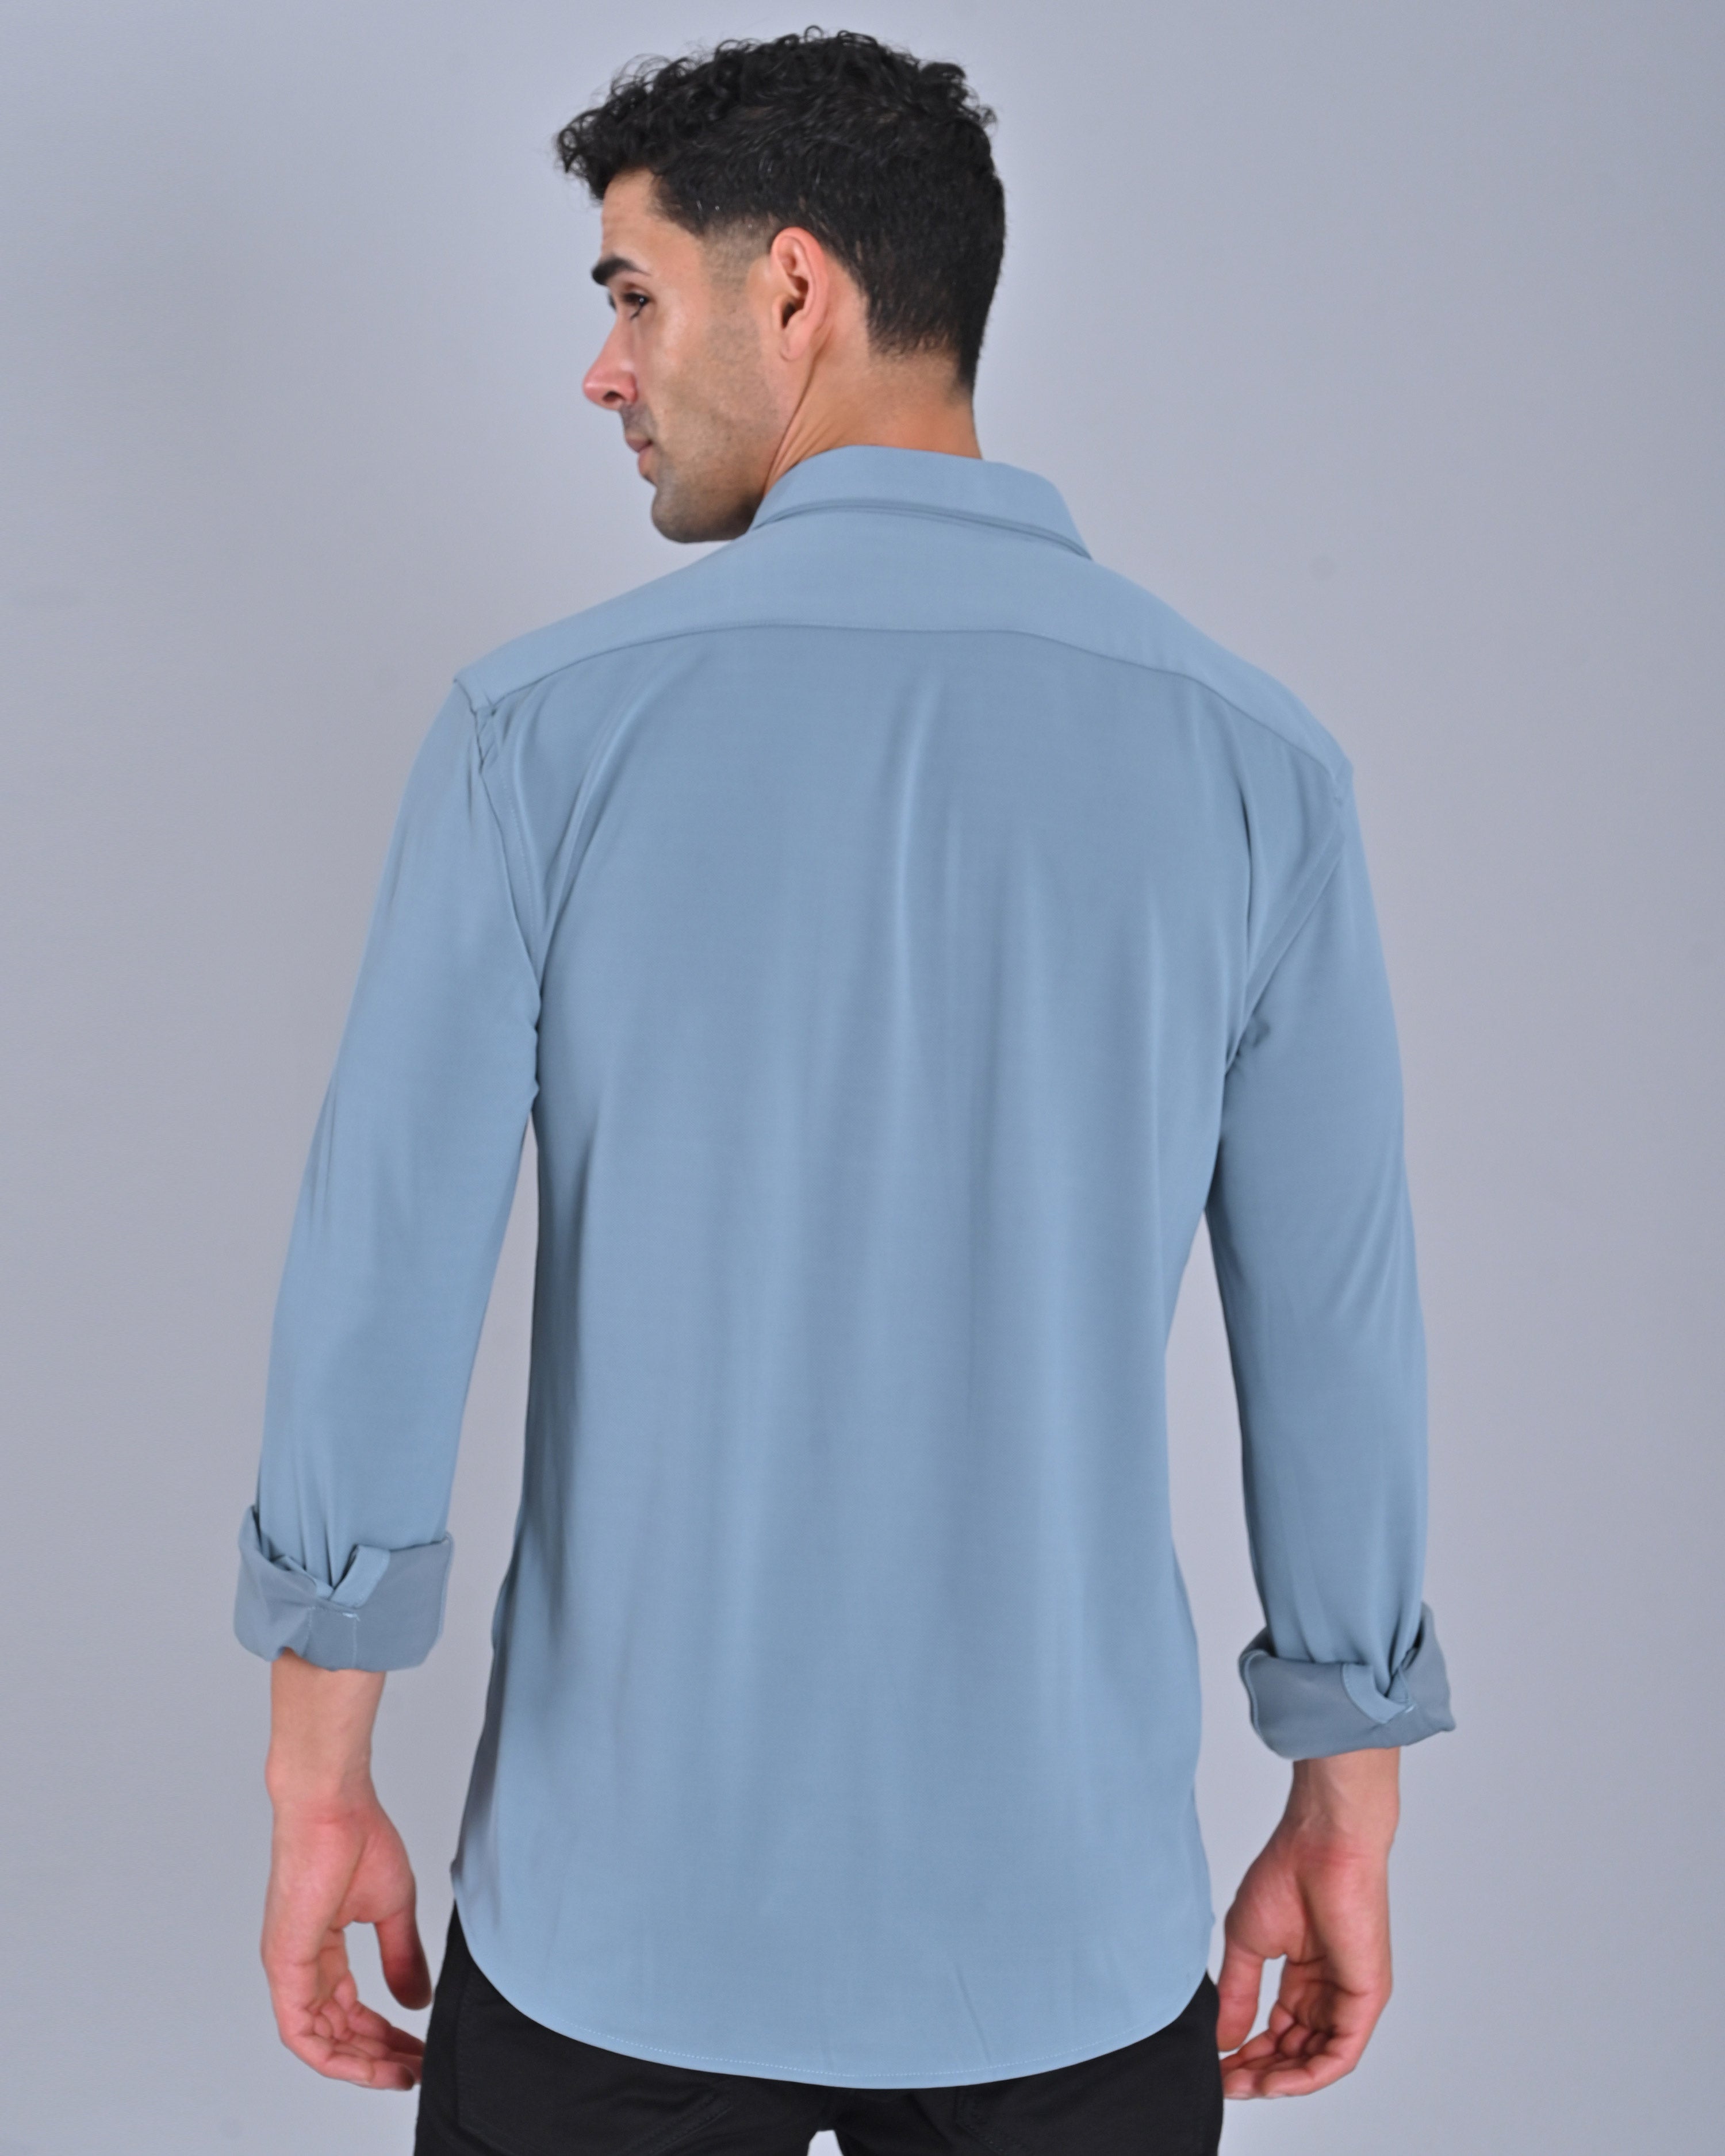 Buy Men's Solid Blue Cross Knit Shirt